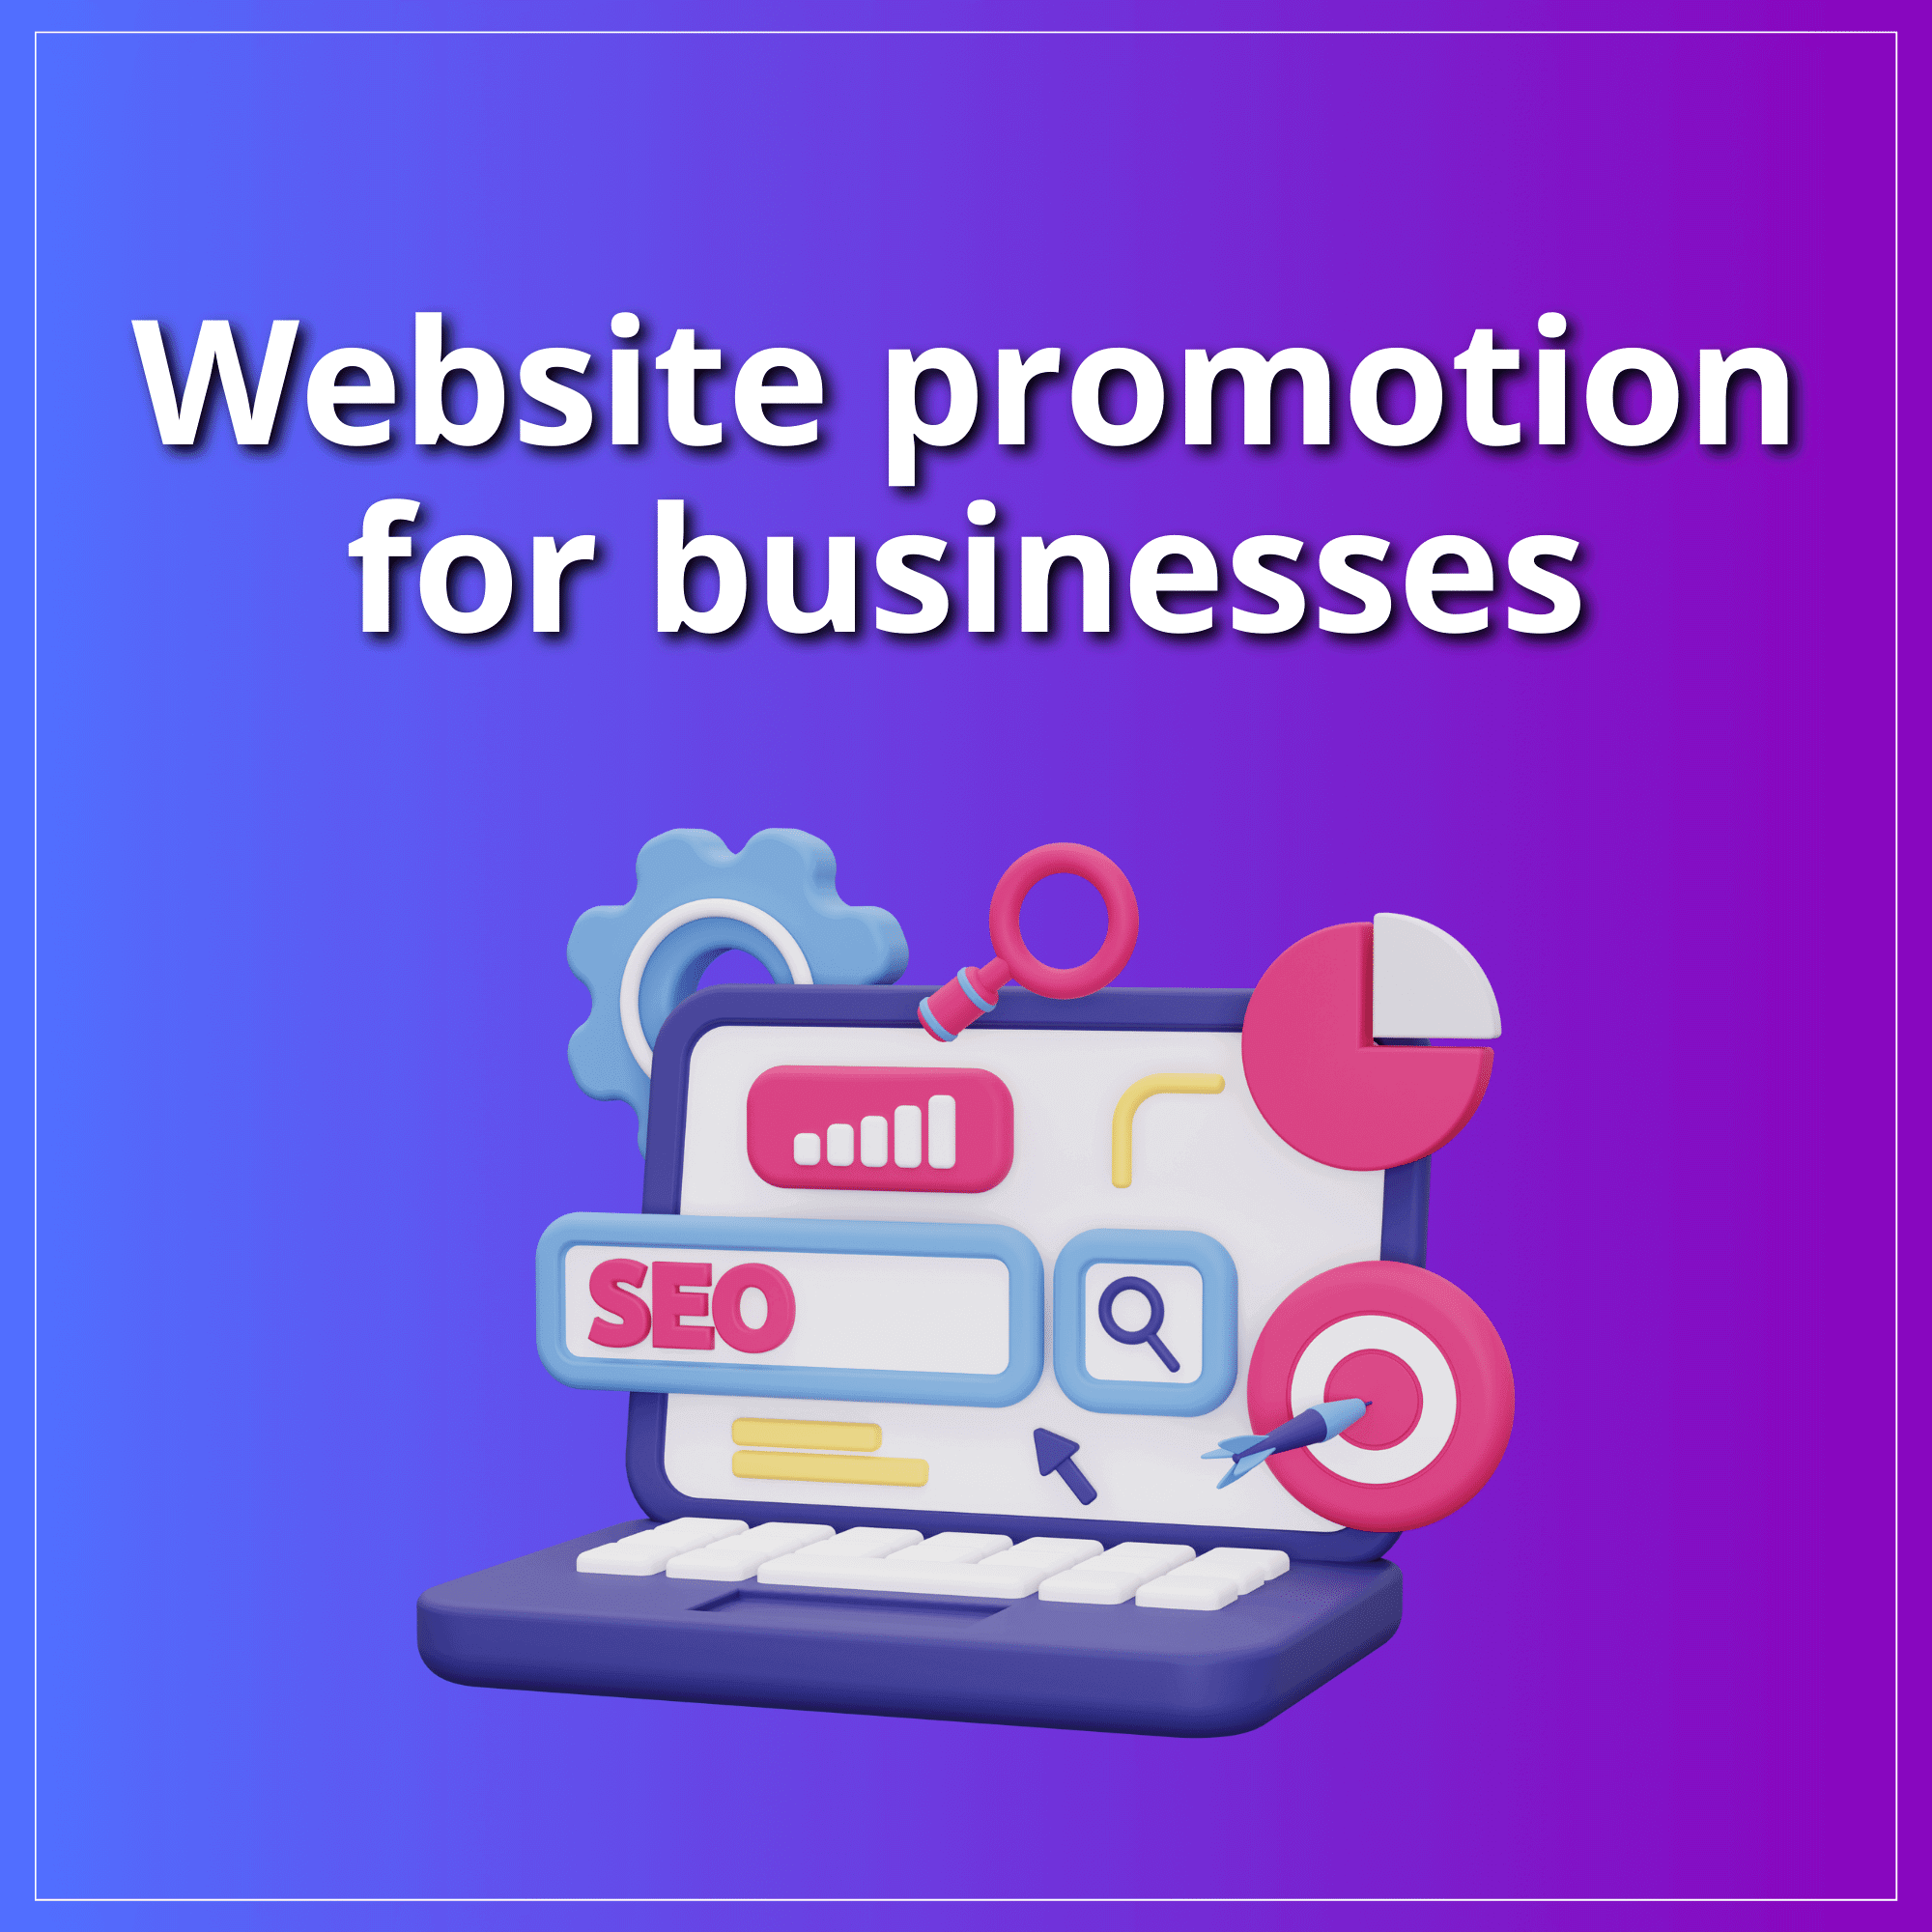 Website promotion for businesses